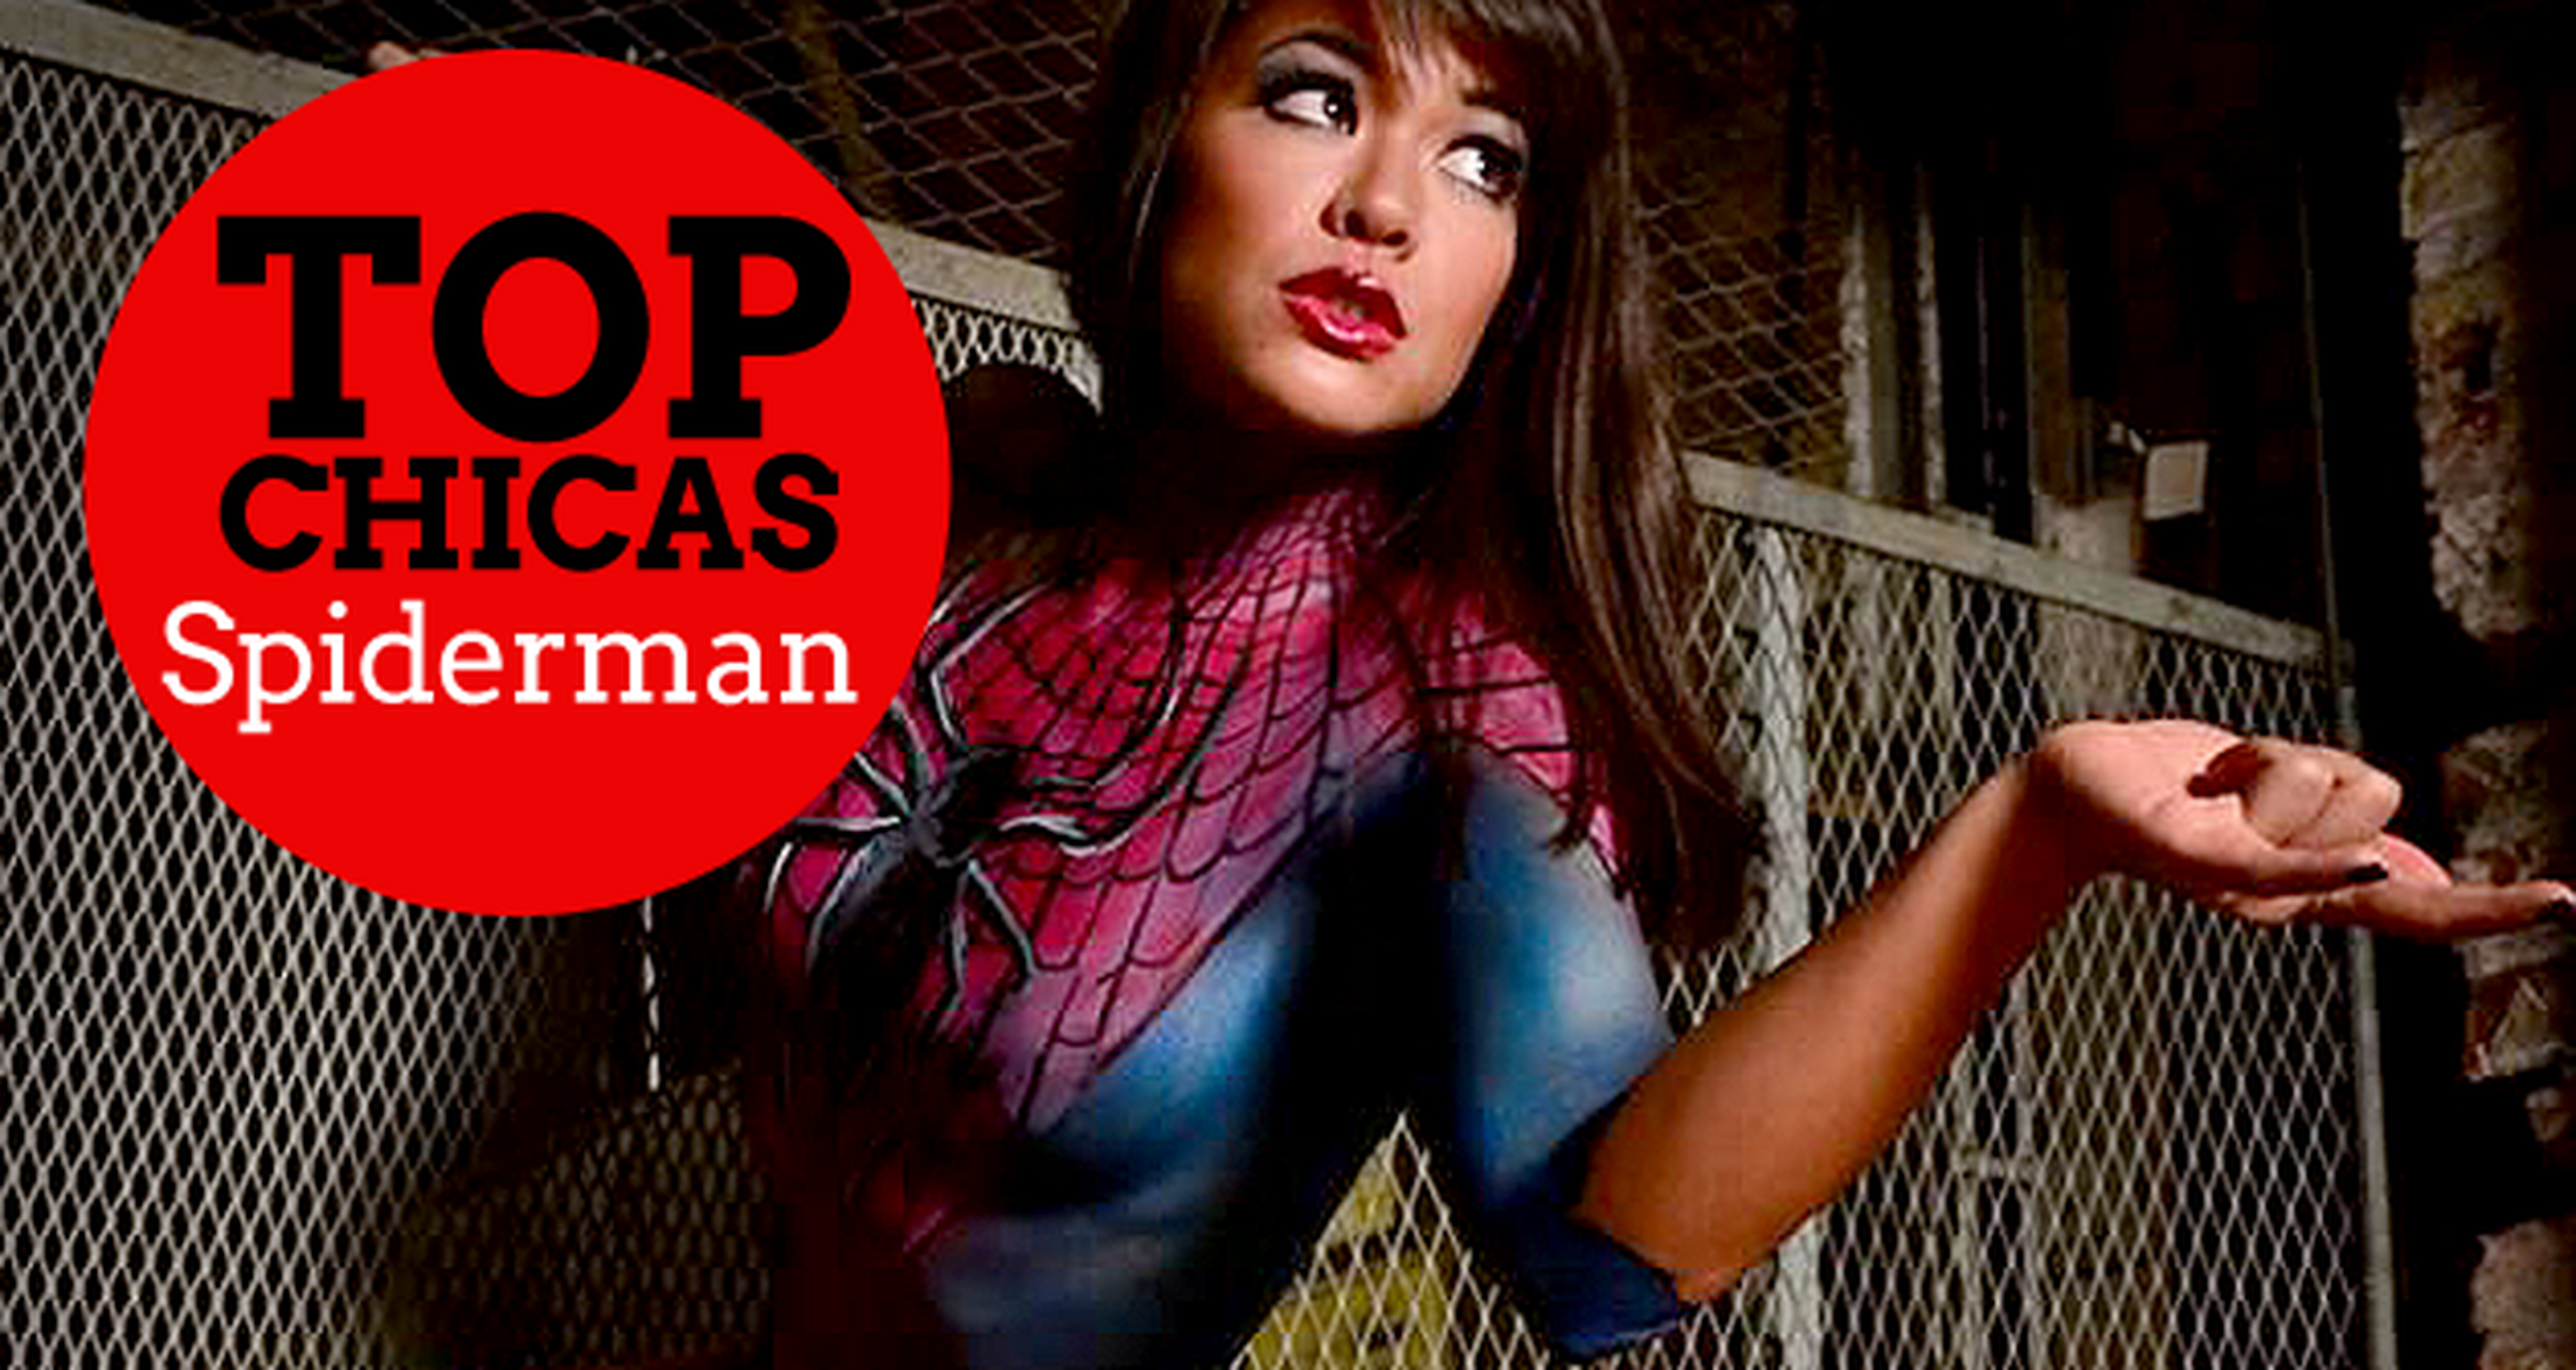 Top chicas: Spider-Man